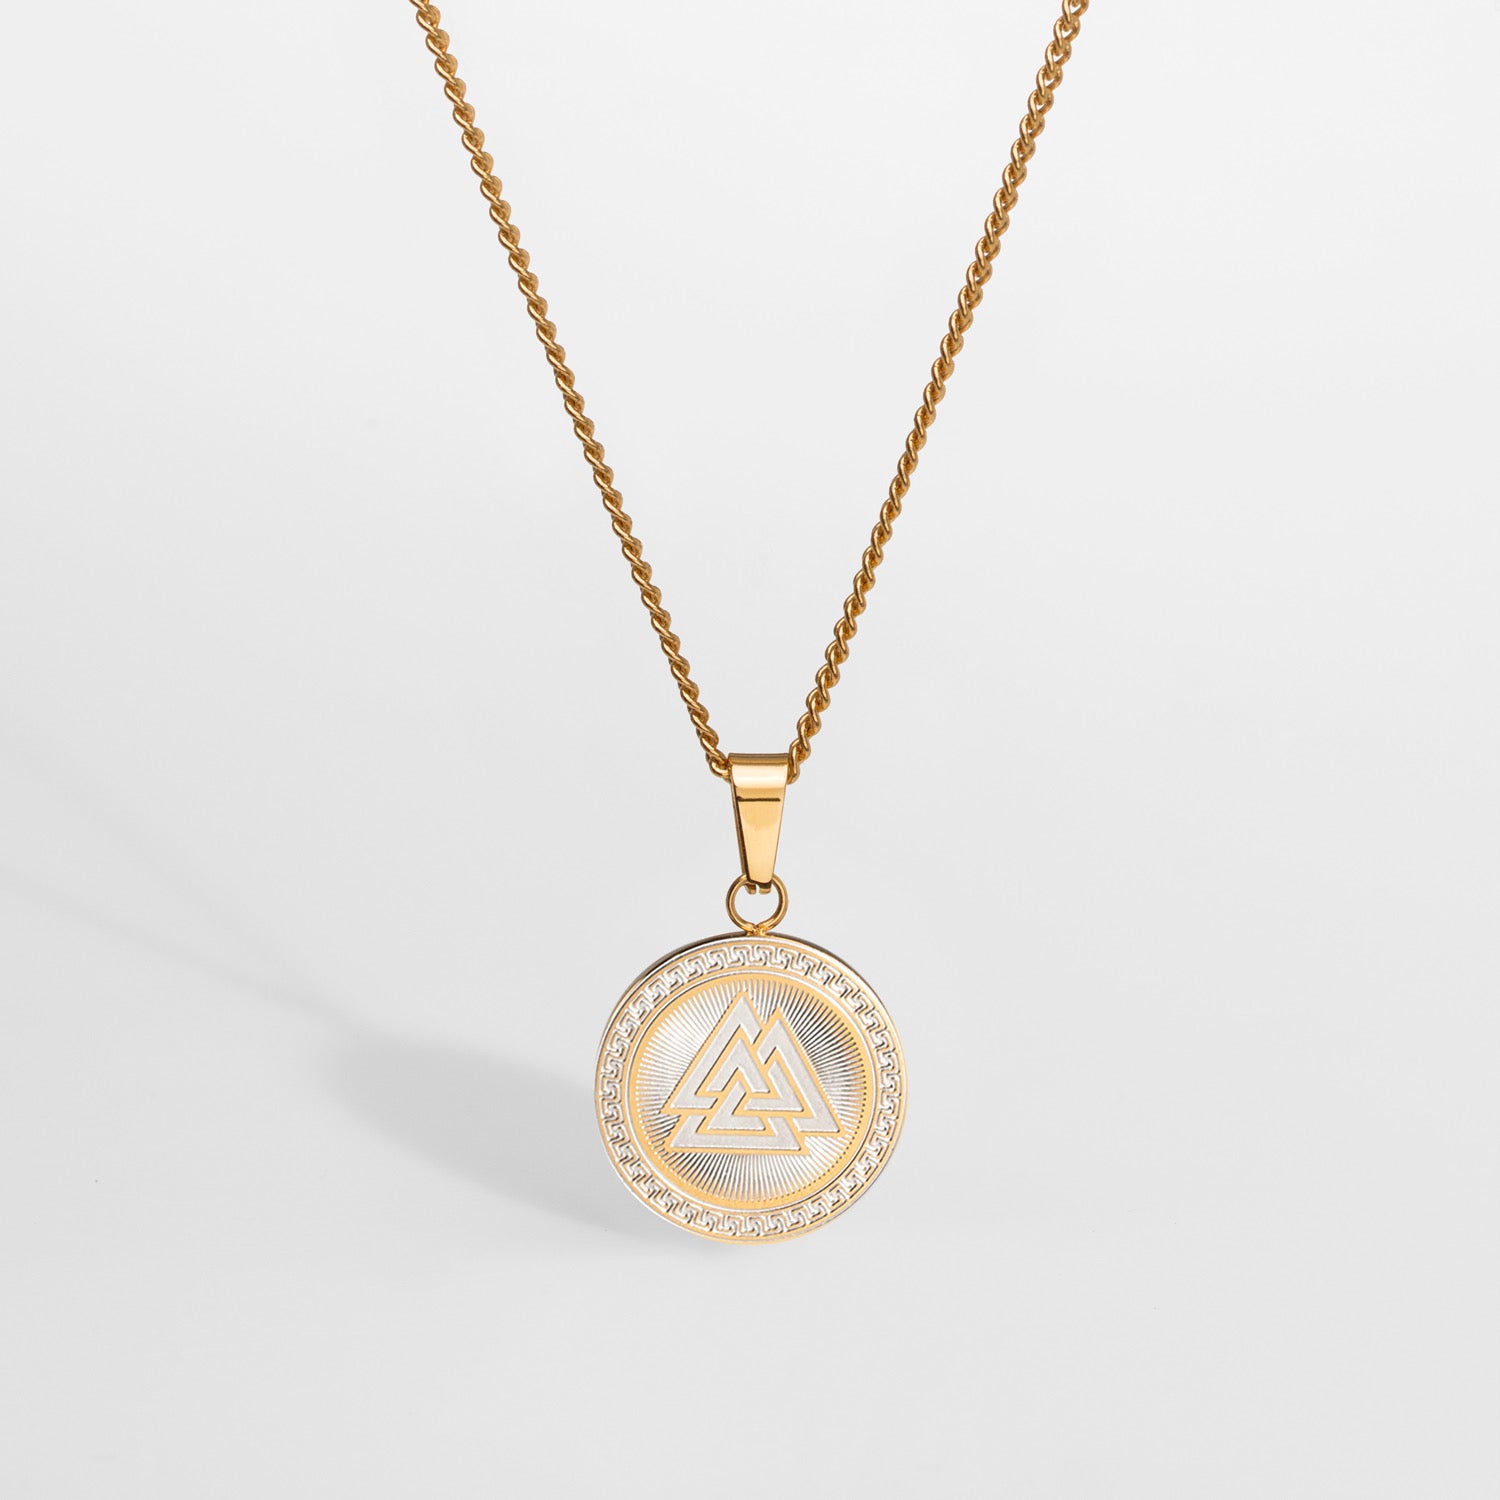 NL Valknut Signature pendant - Gold-toned